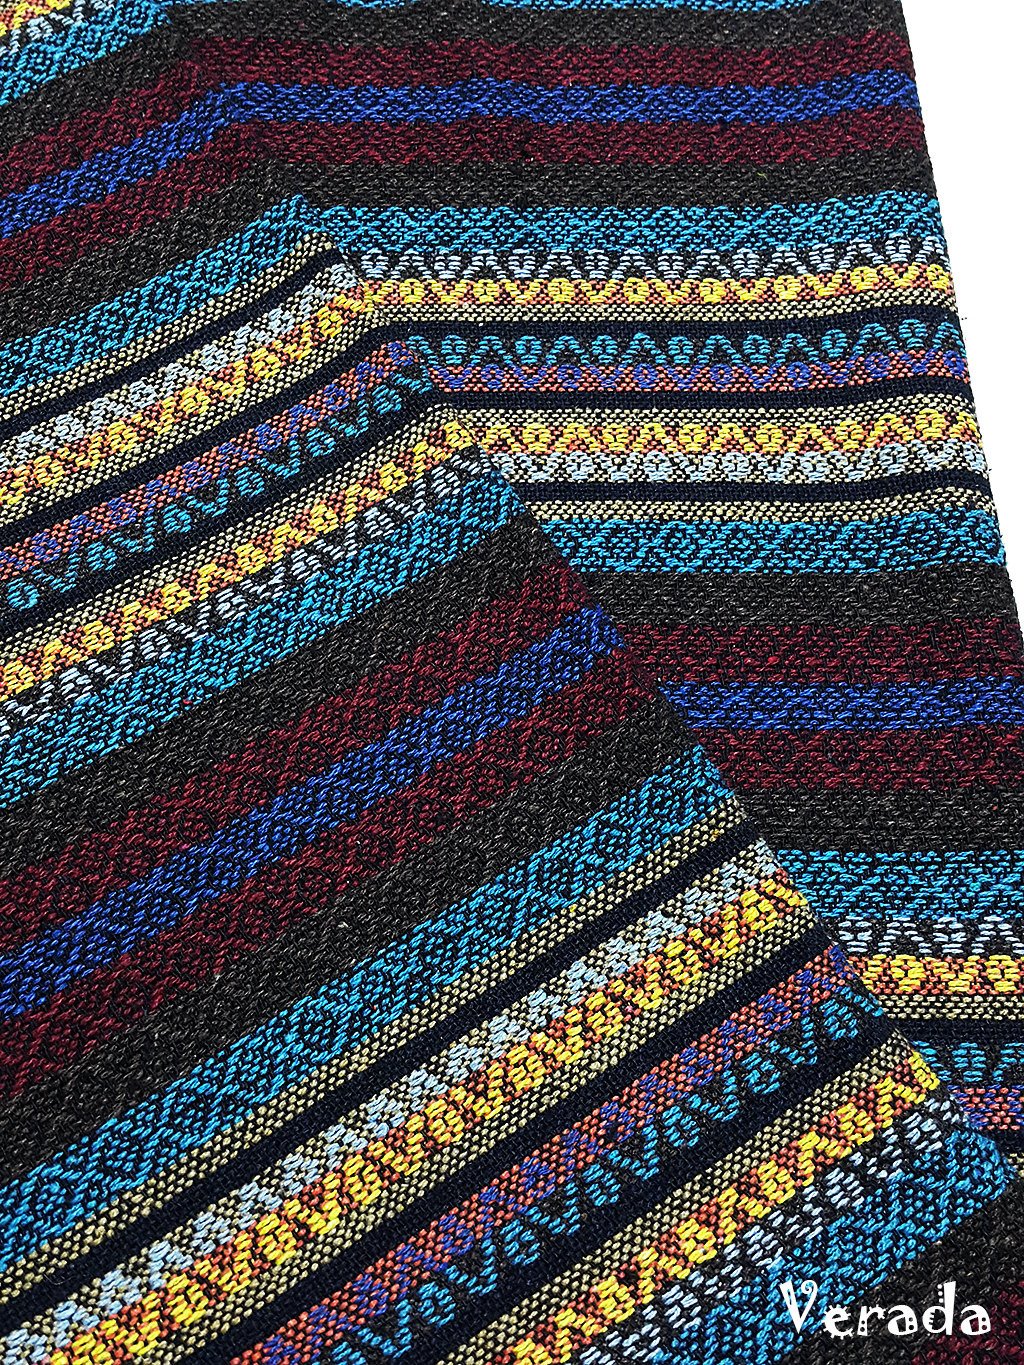 Thai Woven Cotton Tribal Fabric Textile 1/2 yard (WF148)